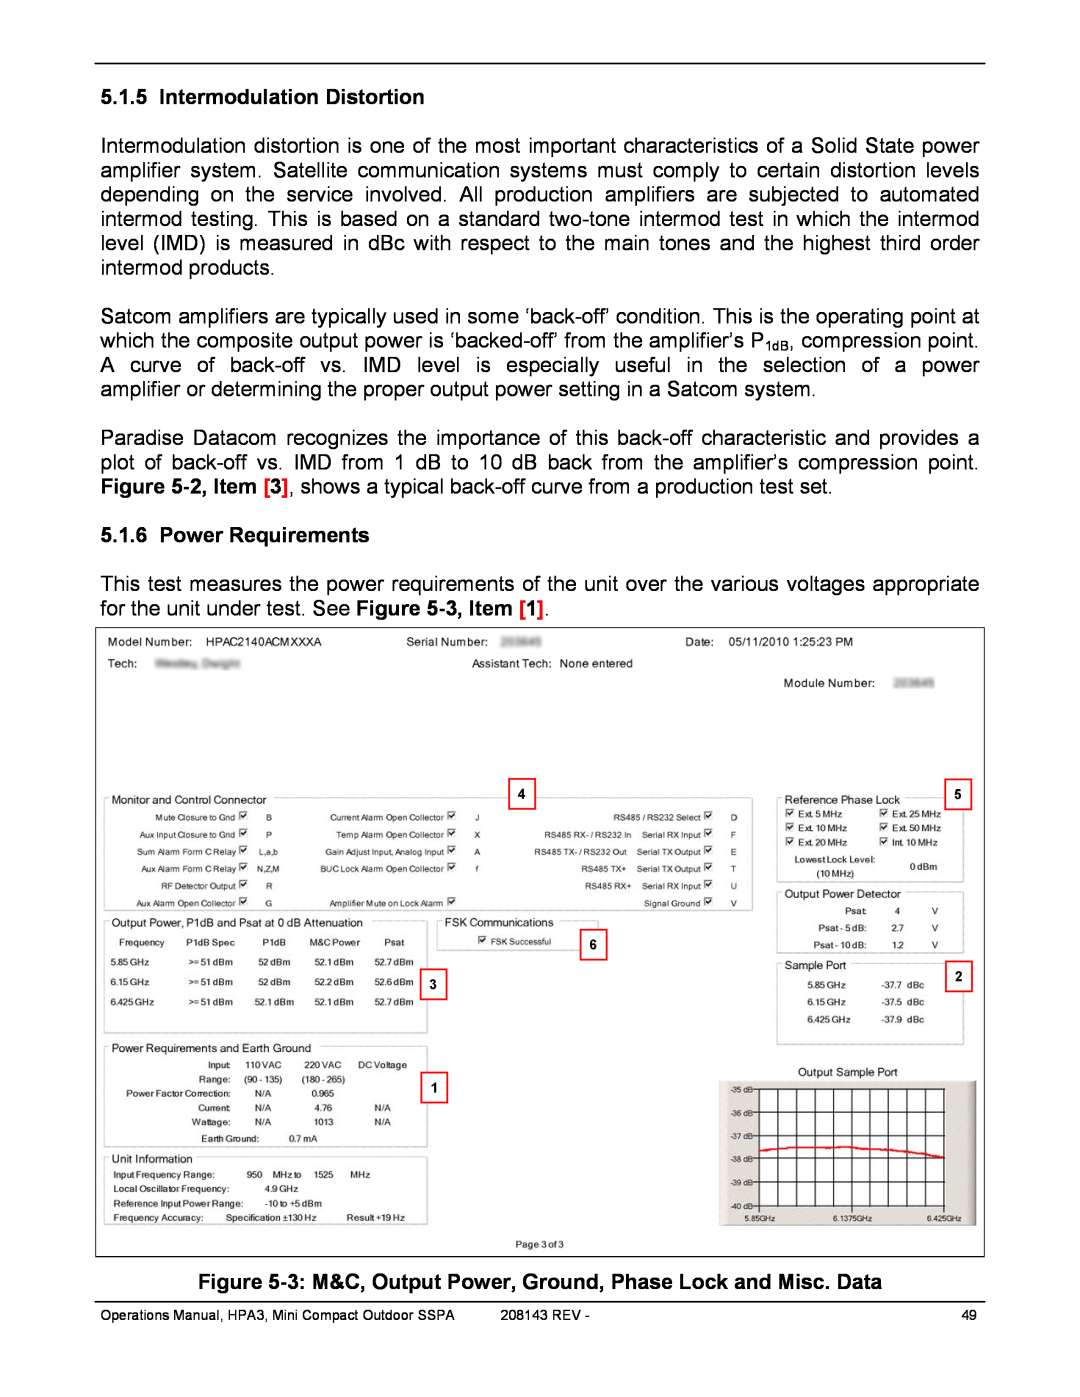 Paradise RA 5785 manual Intermodulation Distortion, Power Requirements, 208143 REV 